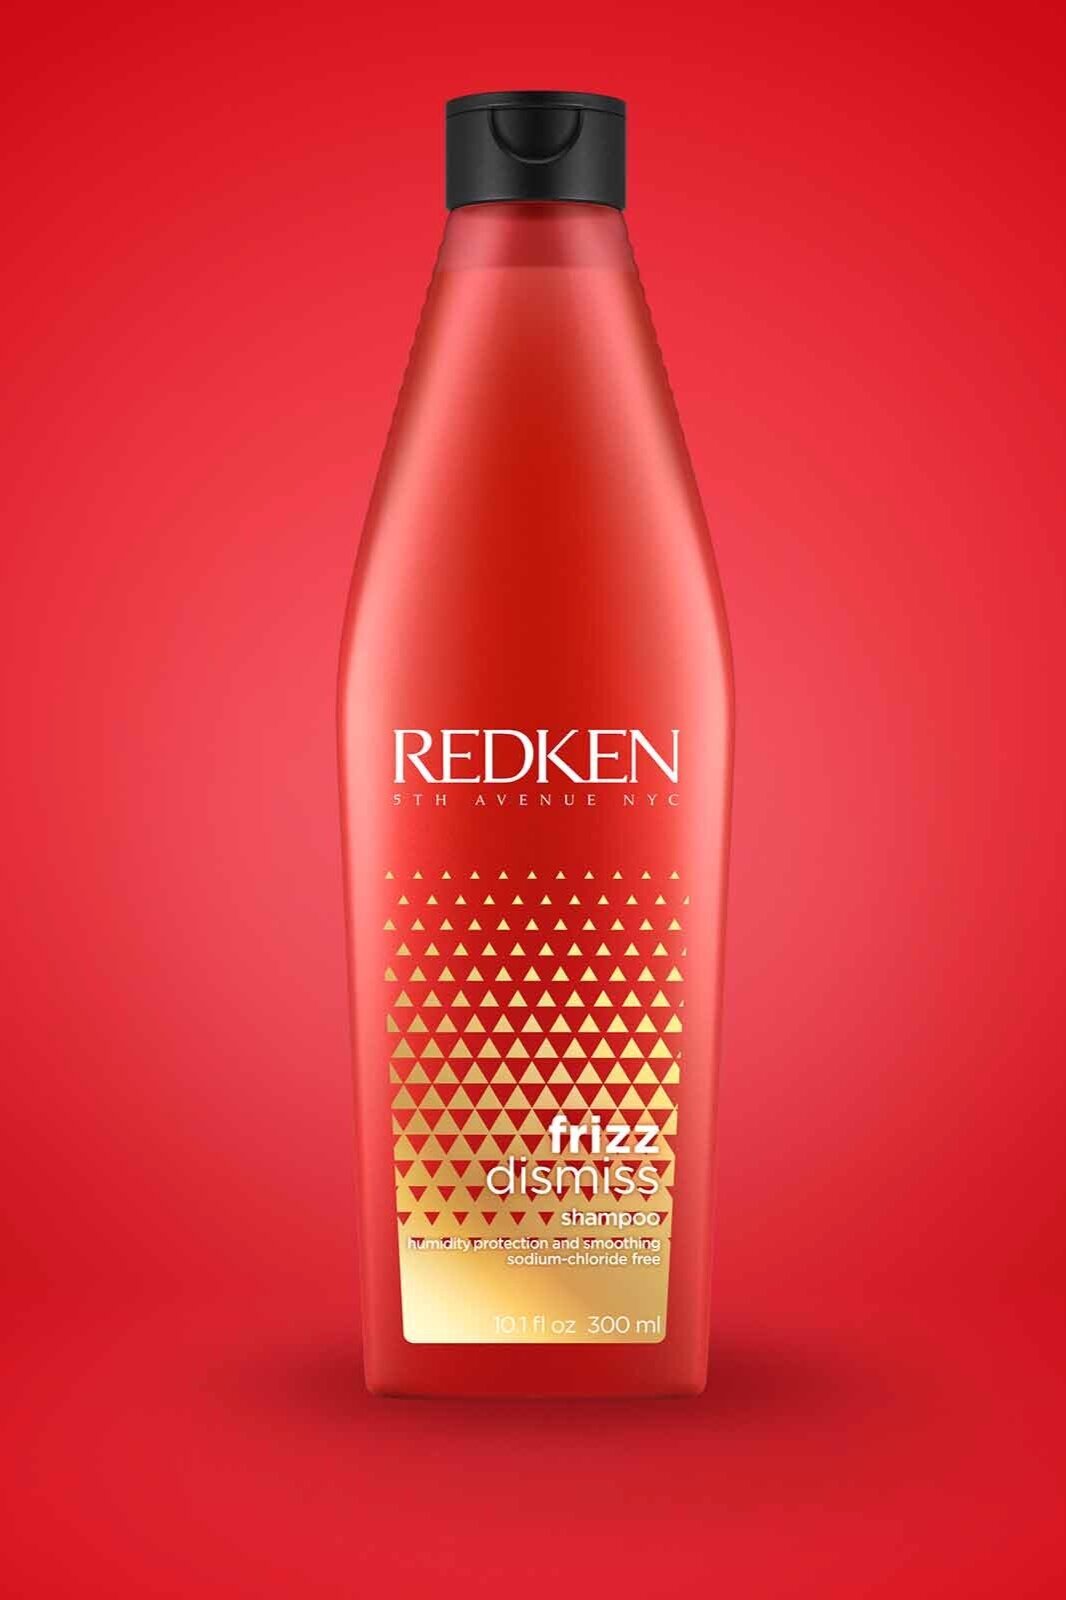 Redken+2018+Product+Frizz+Dismiss+Shampoo+Red+1260x1600.jpg